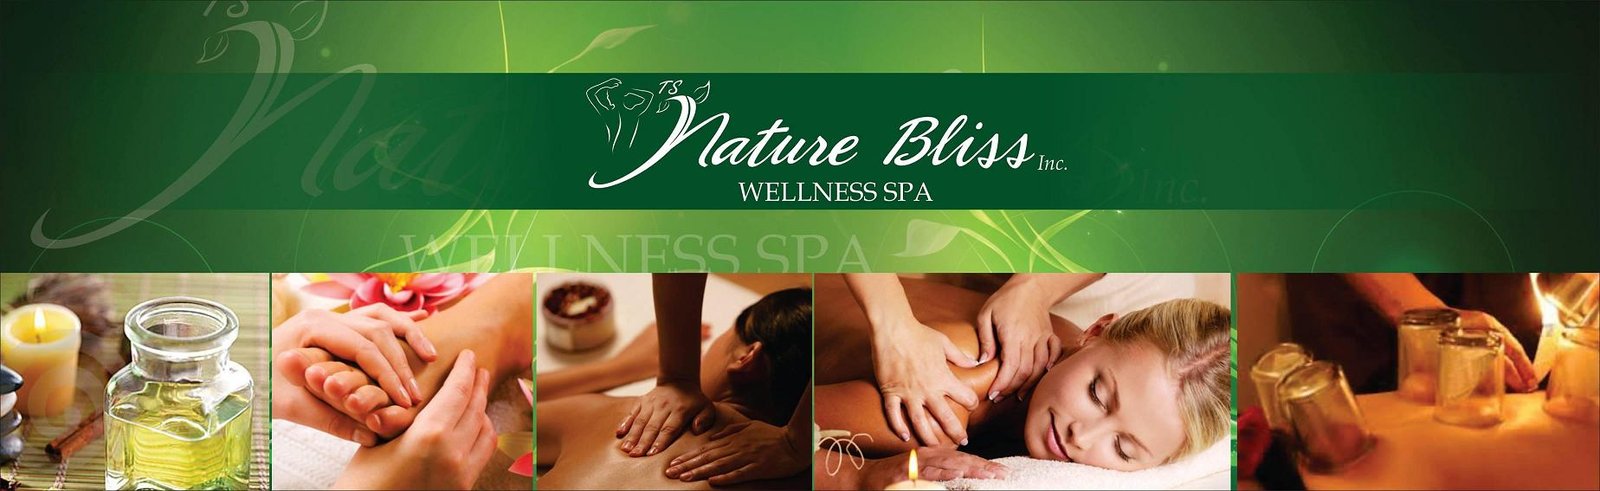 nature bliss wellness spa marikina image massage philippines